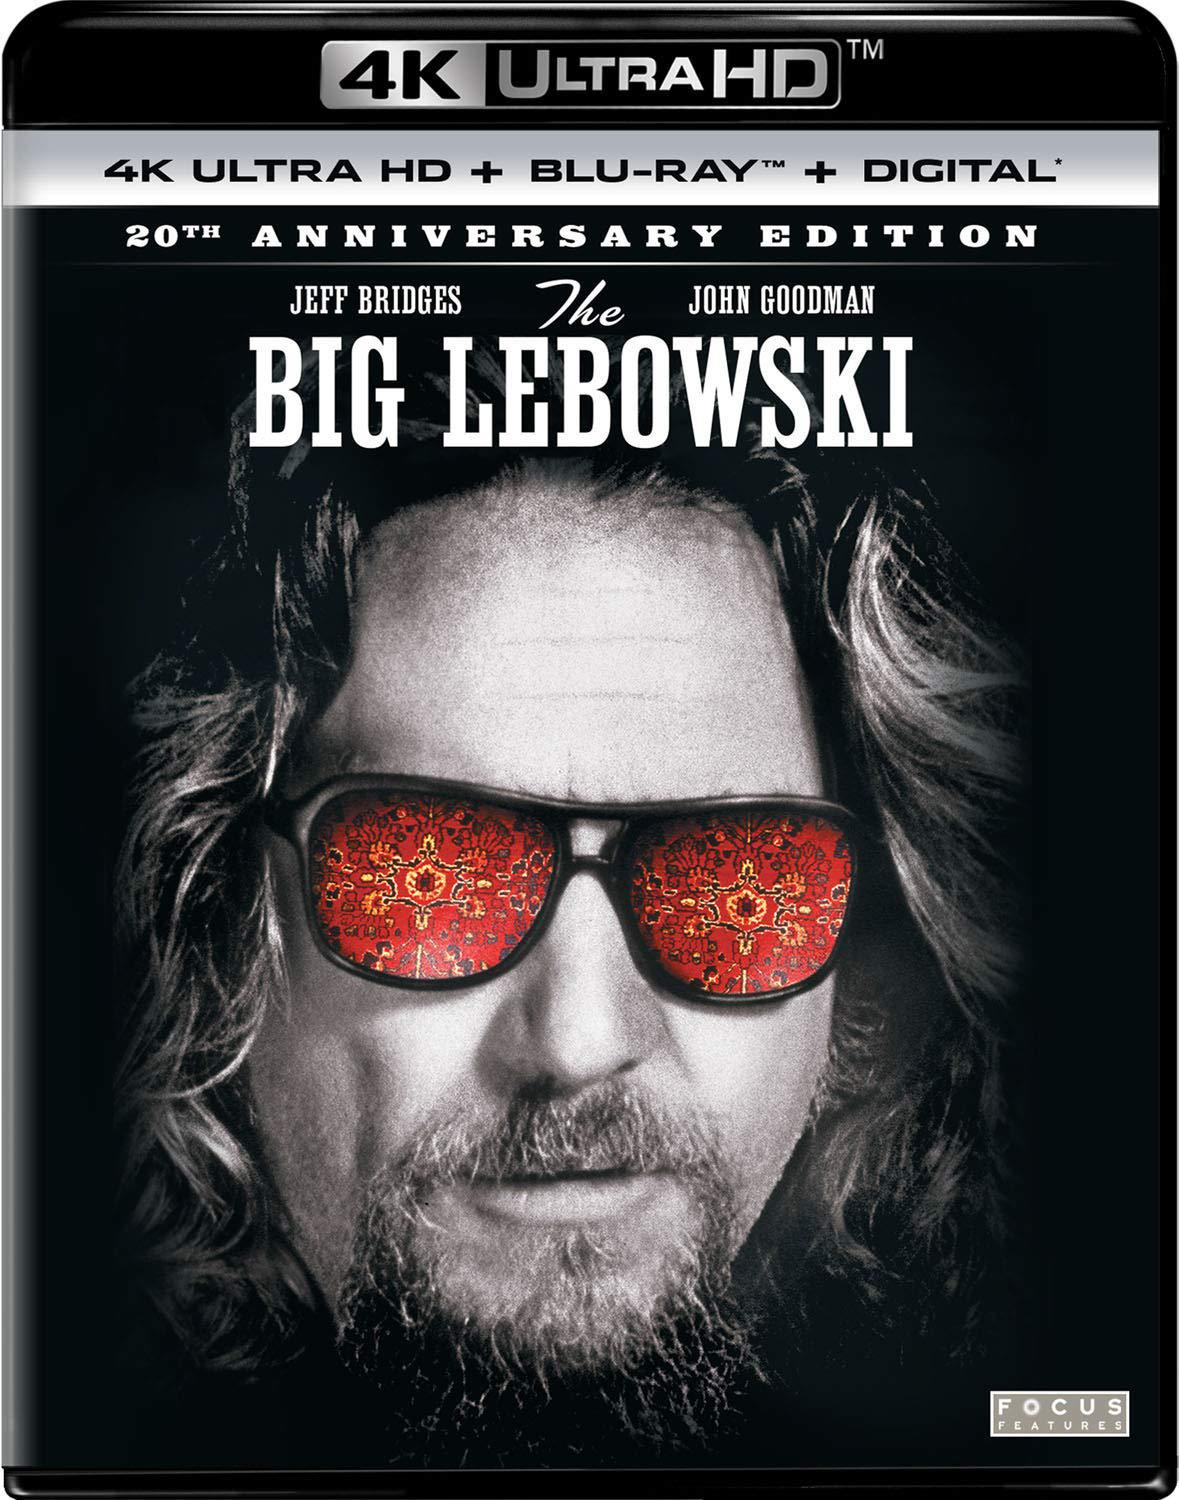 Big Lebowski, The